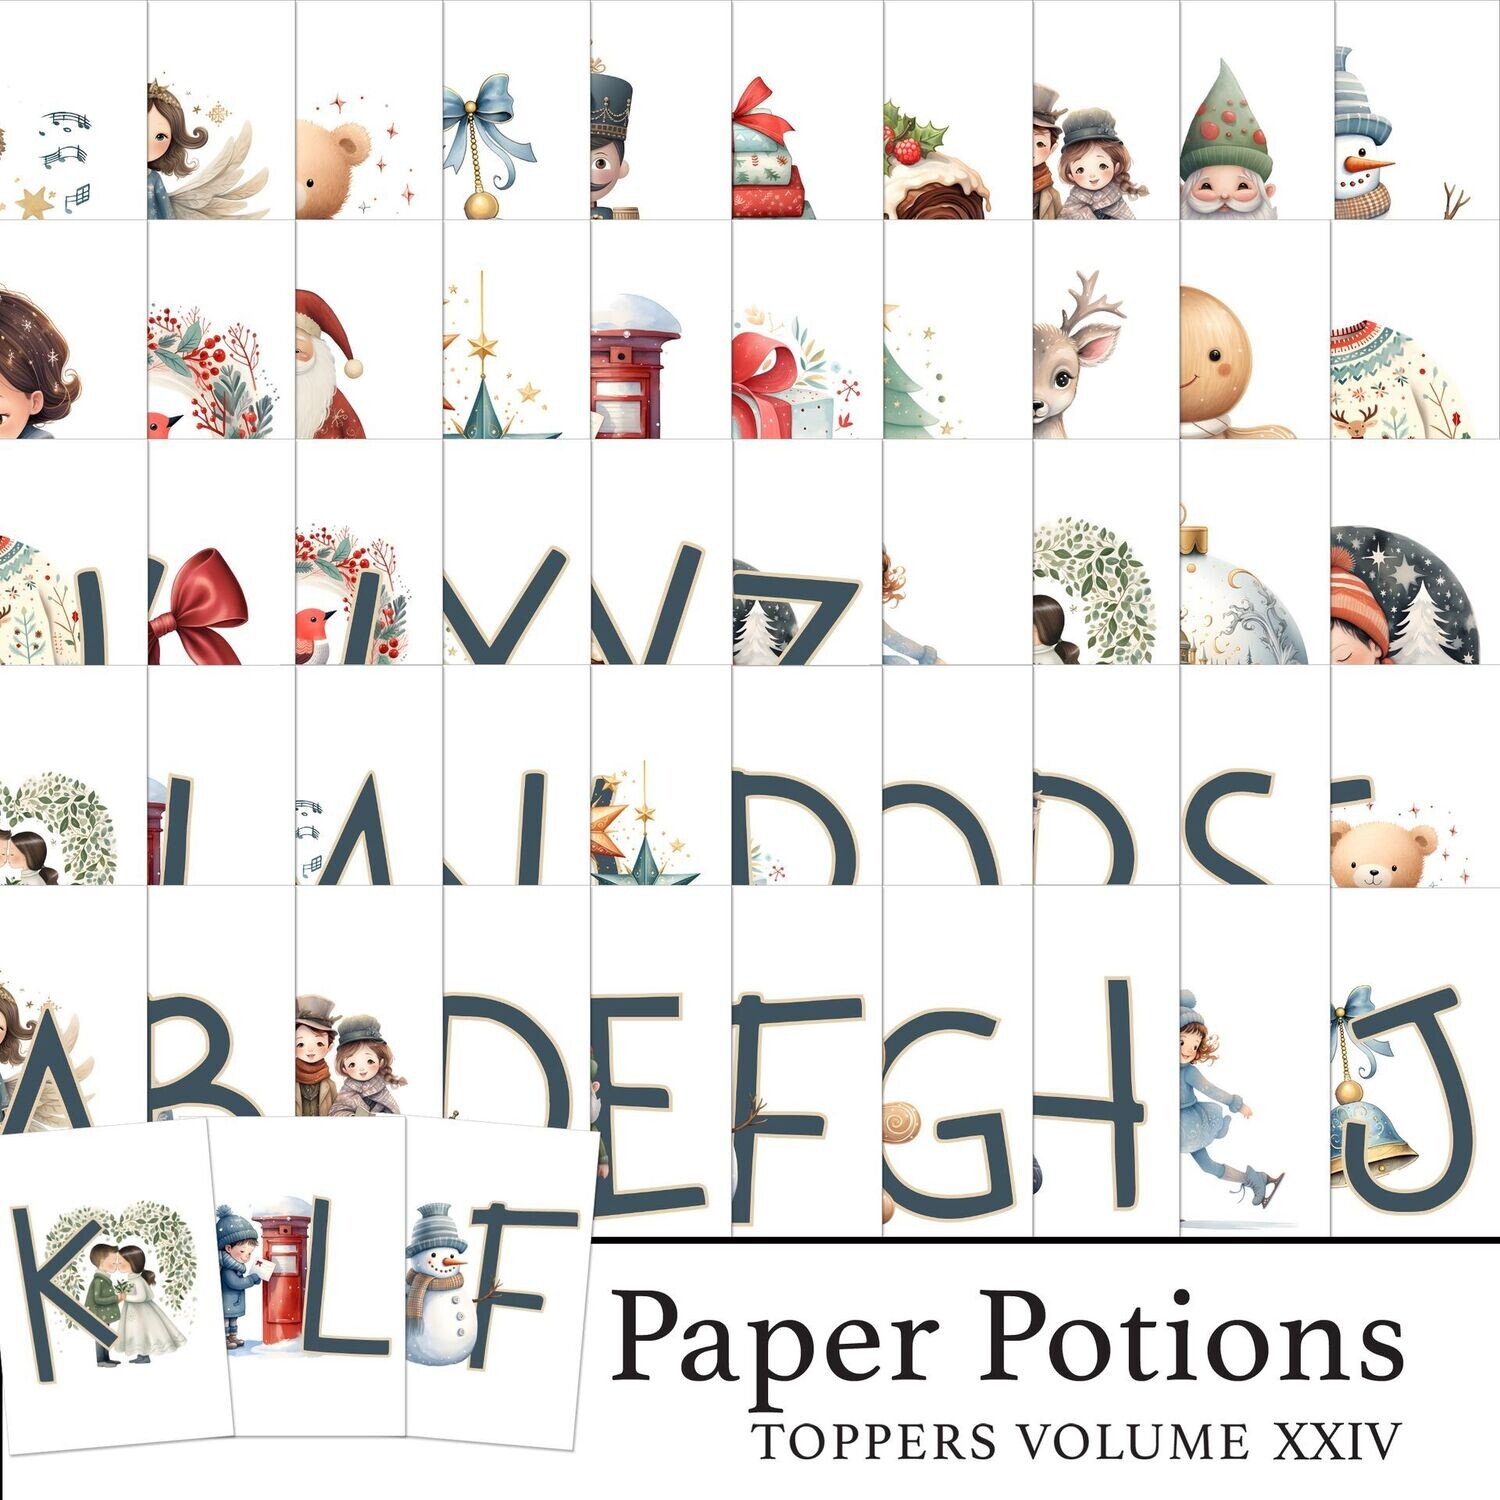 Paper Potions - 100 Toppers Vol XXIV Digital Kit